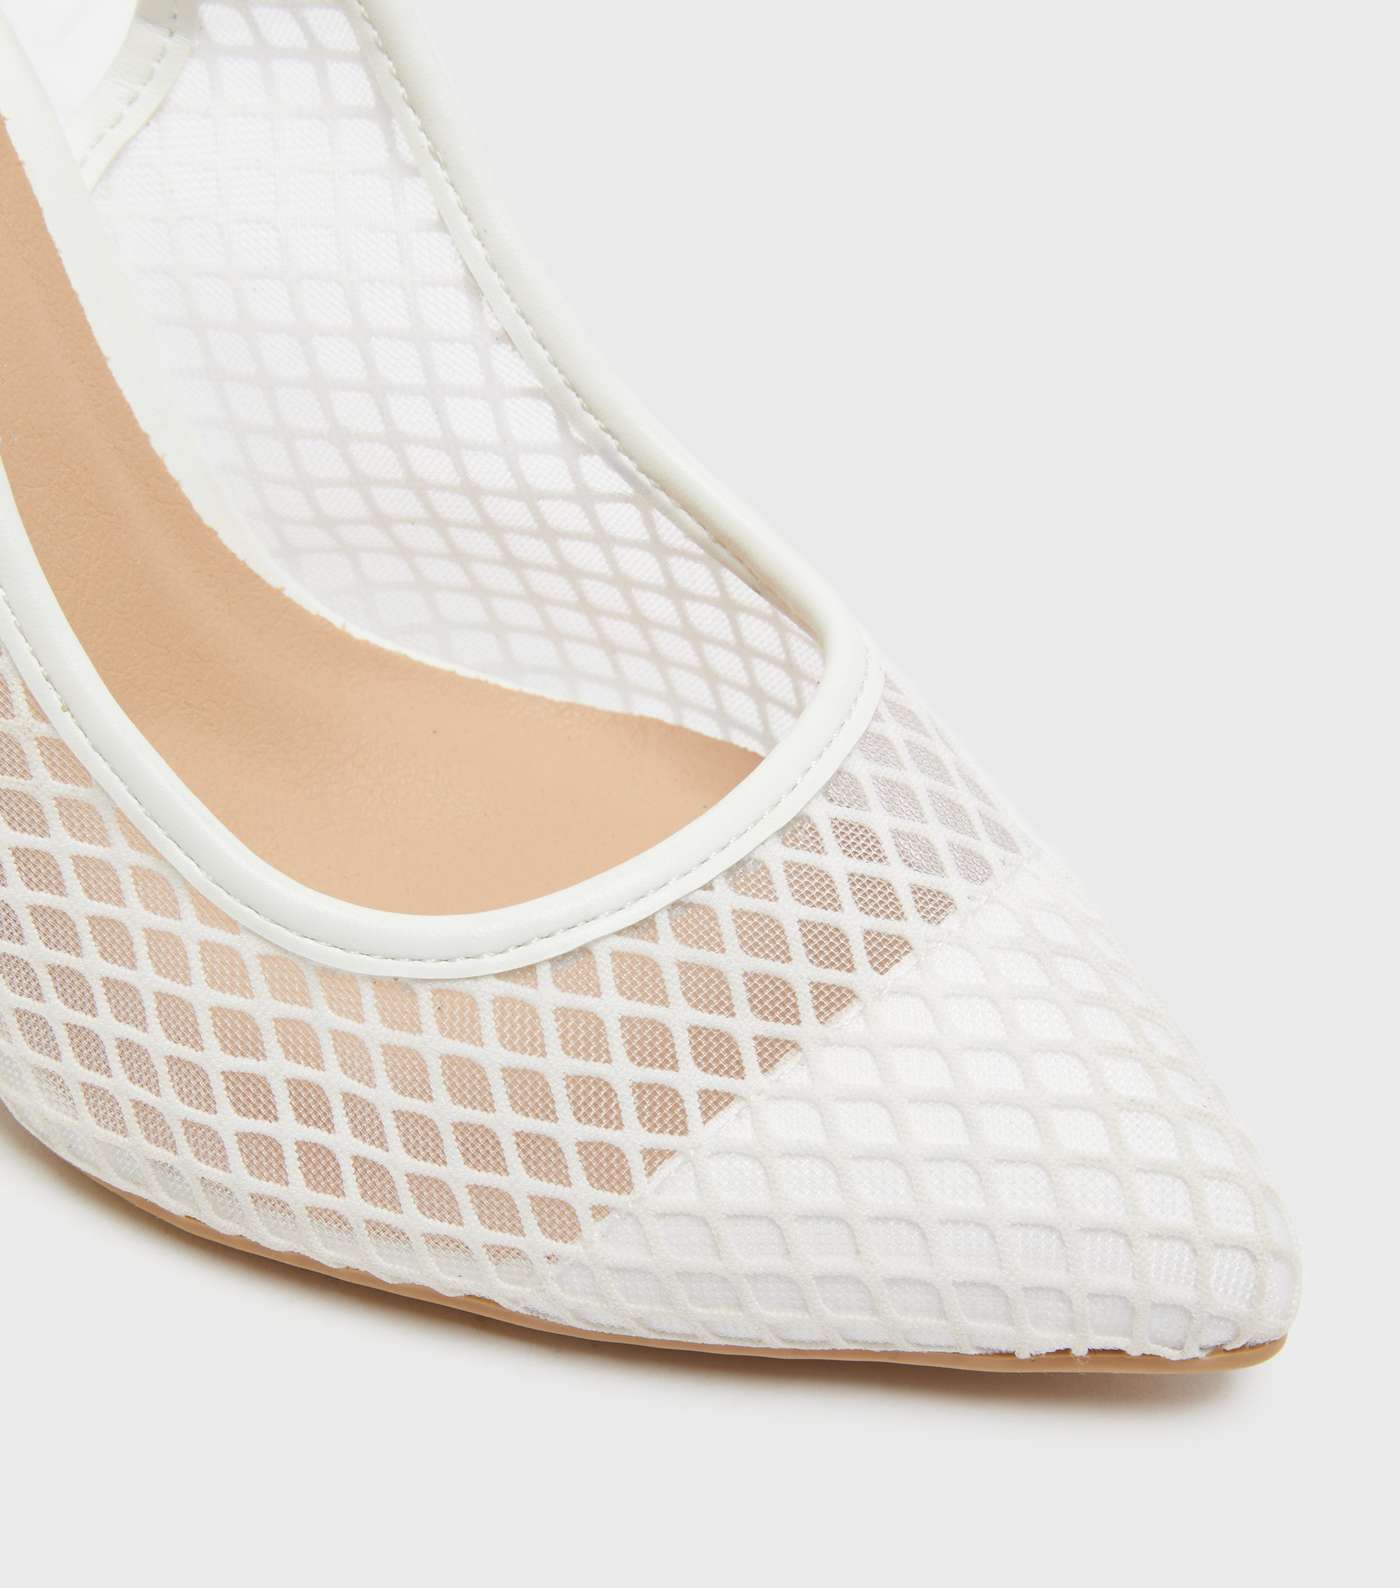 White Mesh Slingback Stiletto Court Shoes Image 4